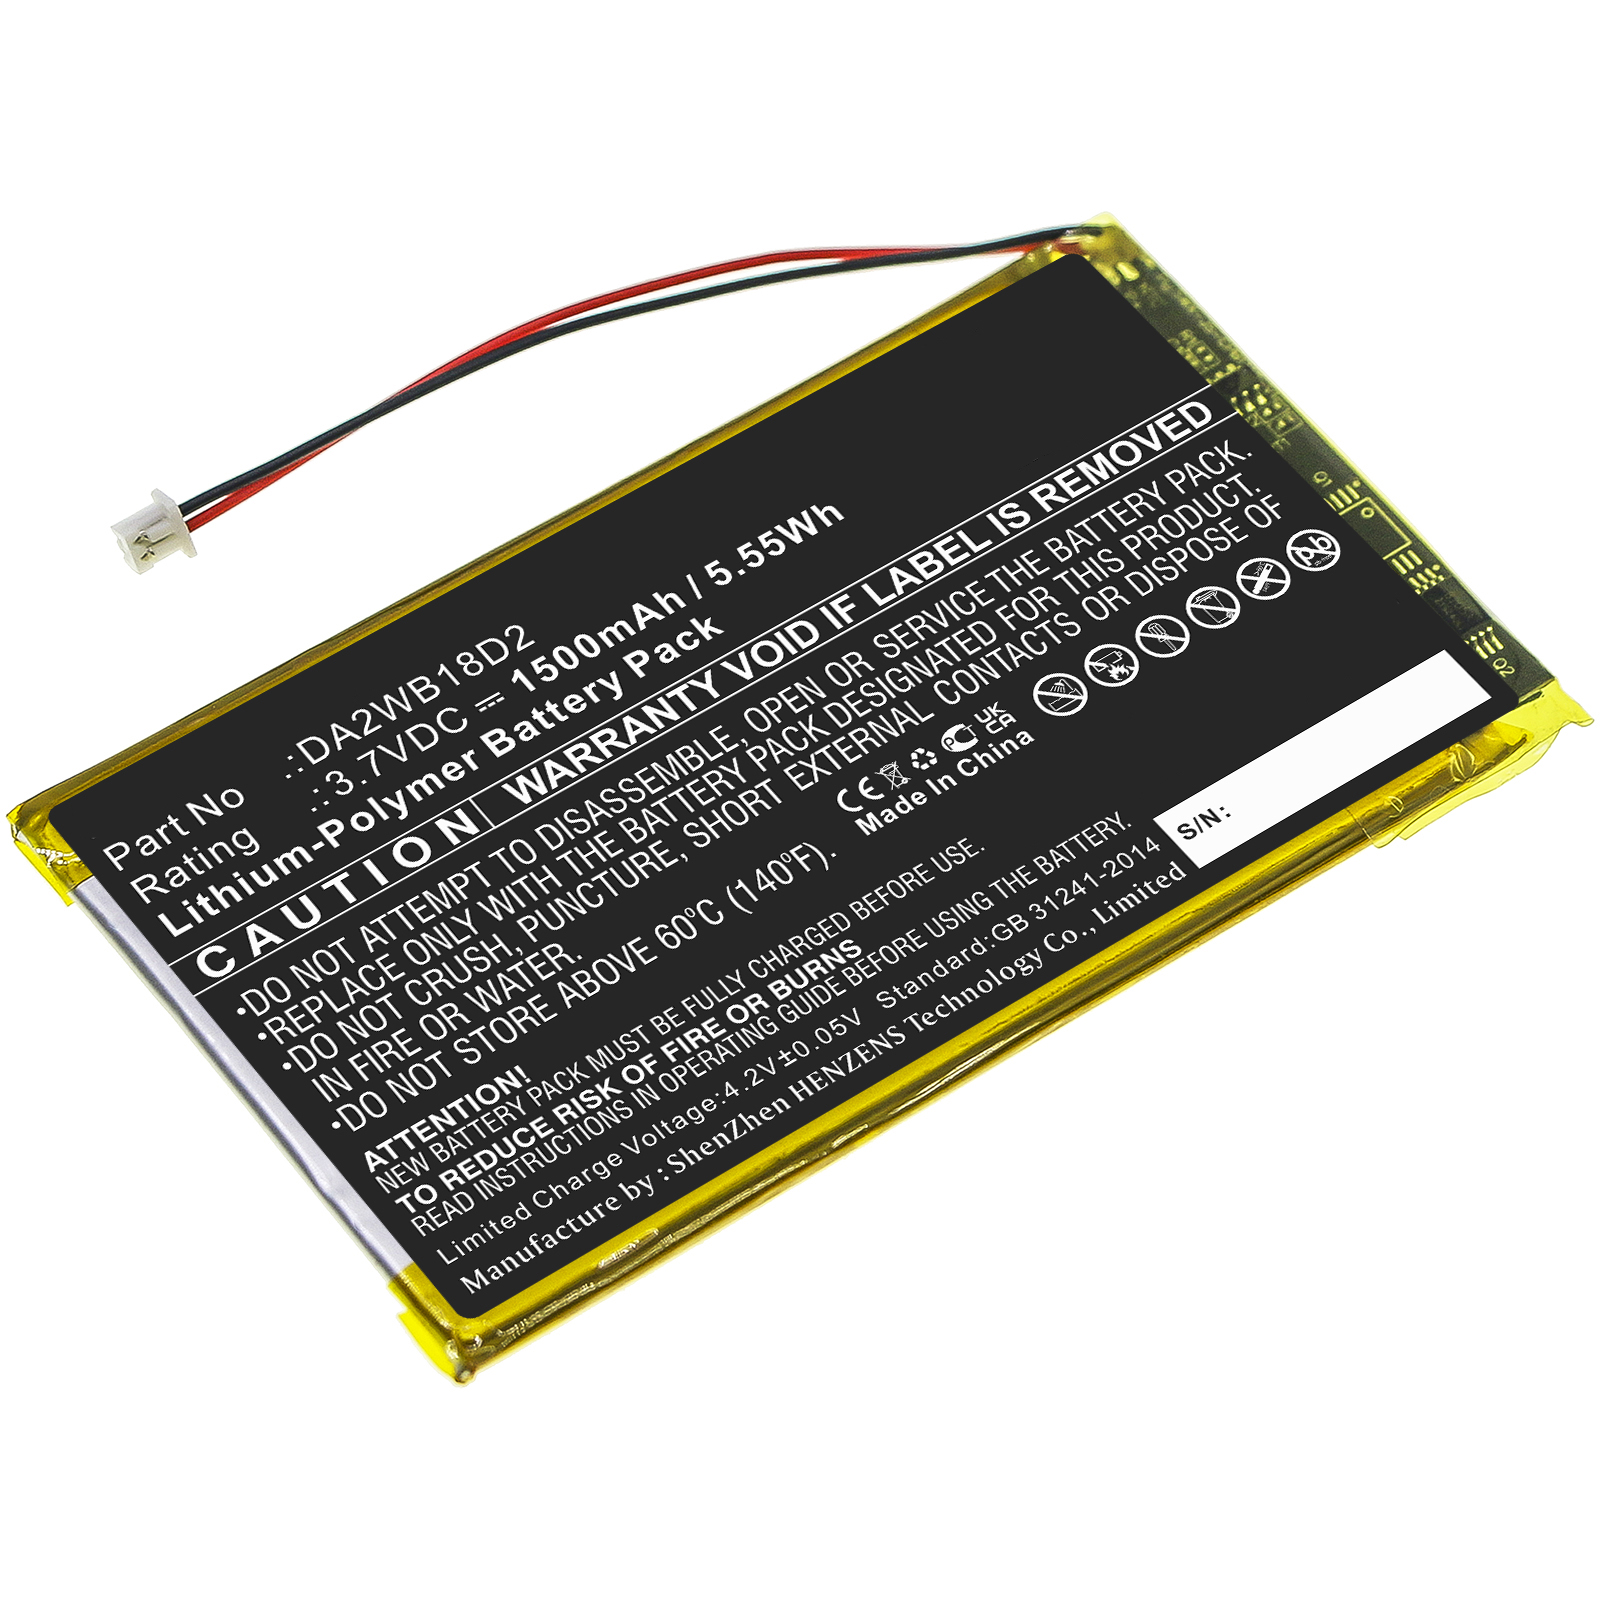 Synergy Digital Player Battery, Compatible with iRiver DA2WB18D2 Player Battery (3.7, Li-Pol, 1500mAh)